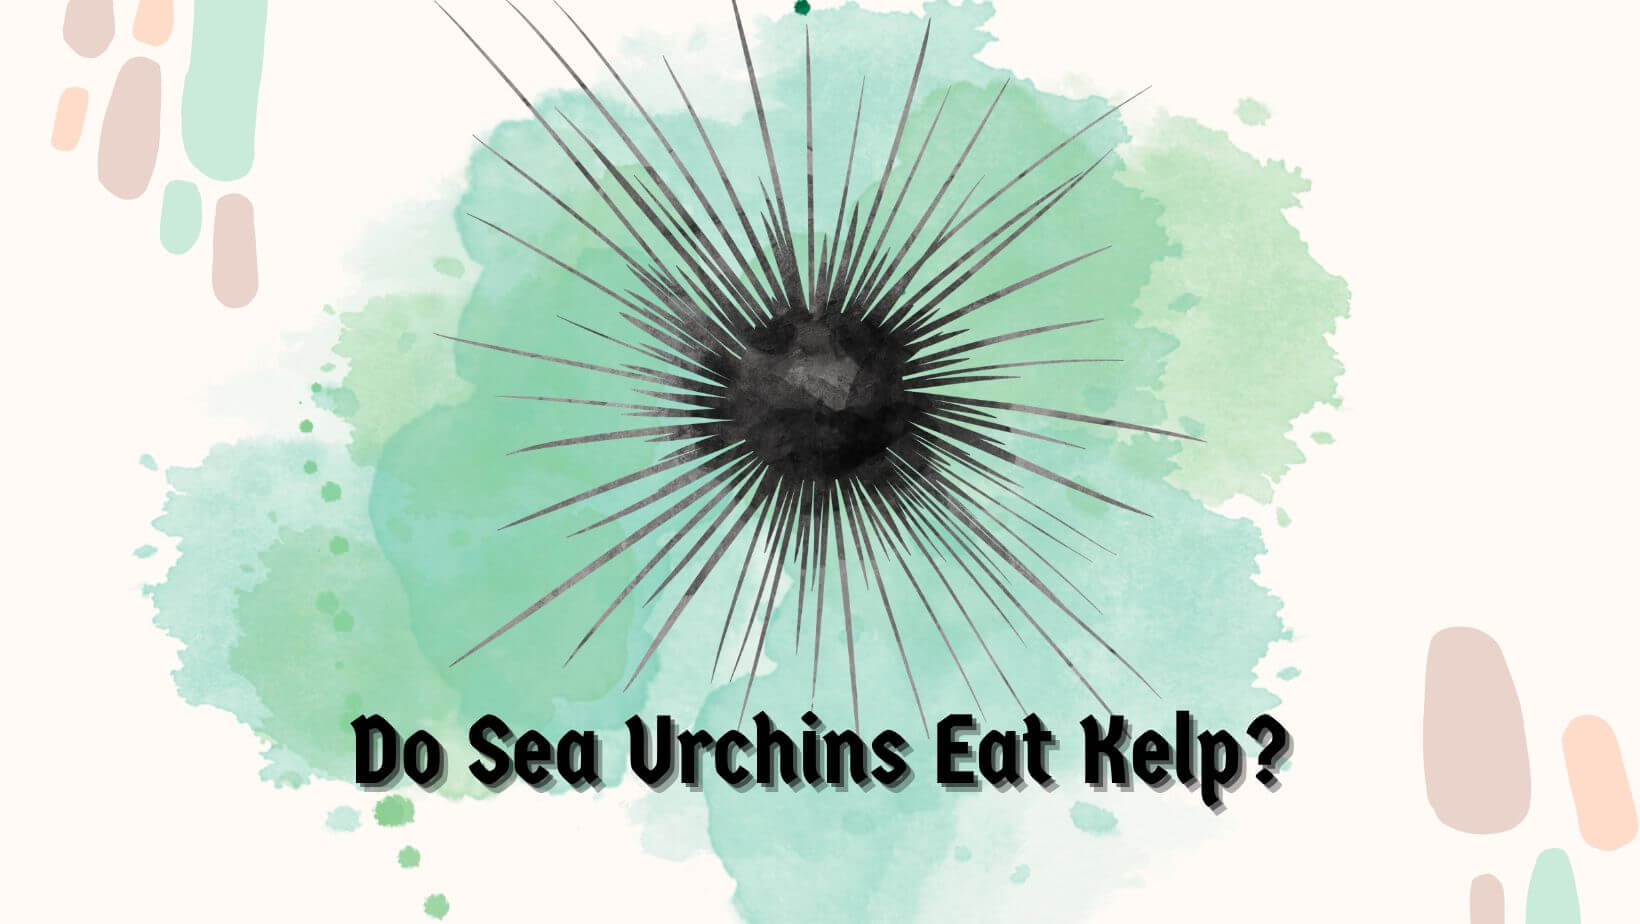 Do Sea Urchins Eat Kelp?